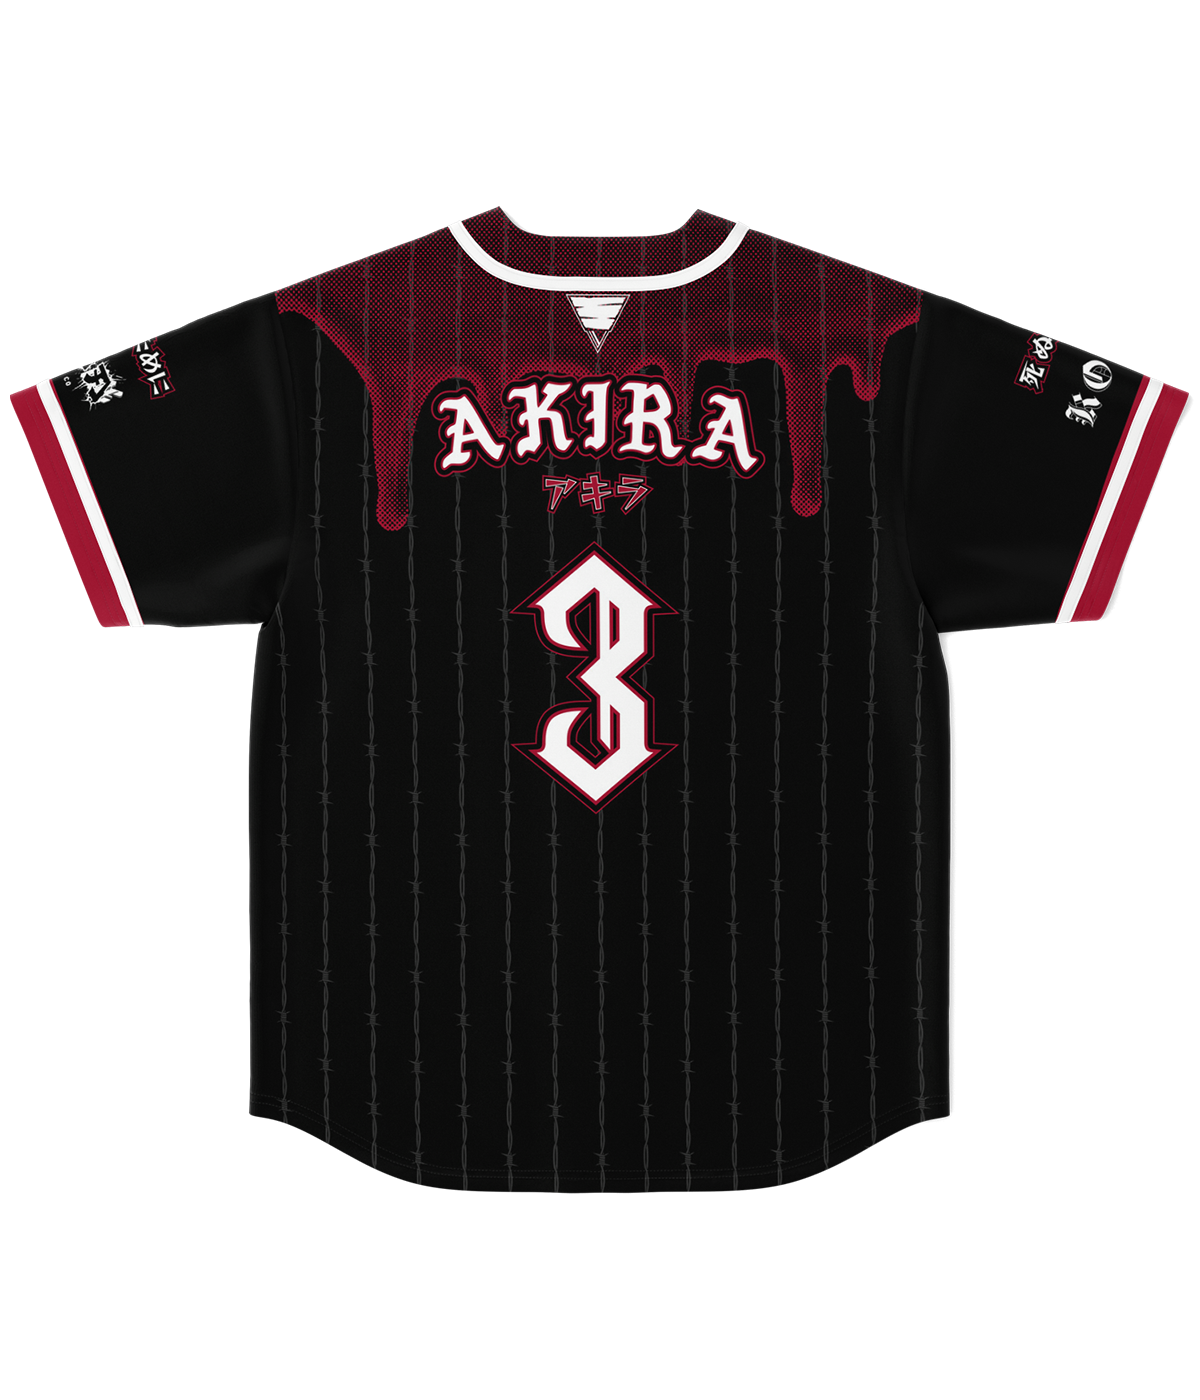 black and red pinstripe baseball jersey